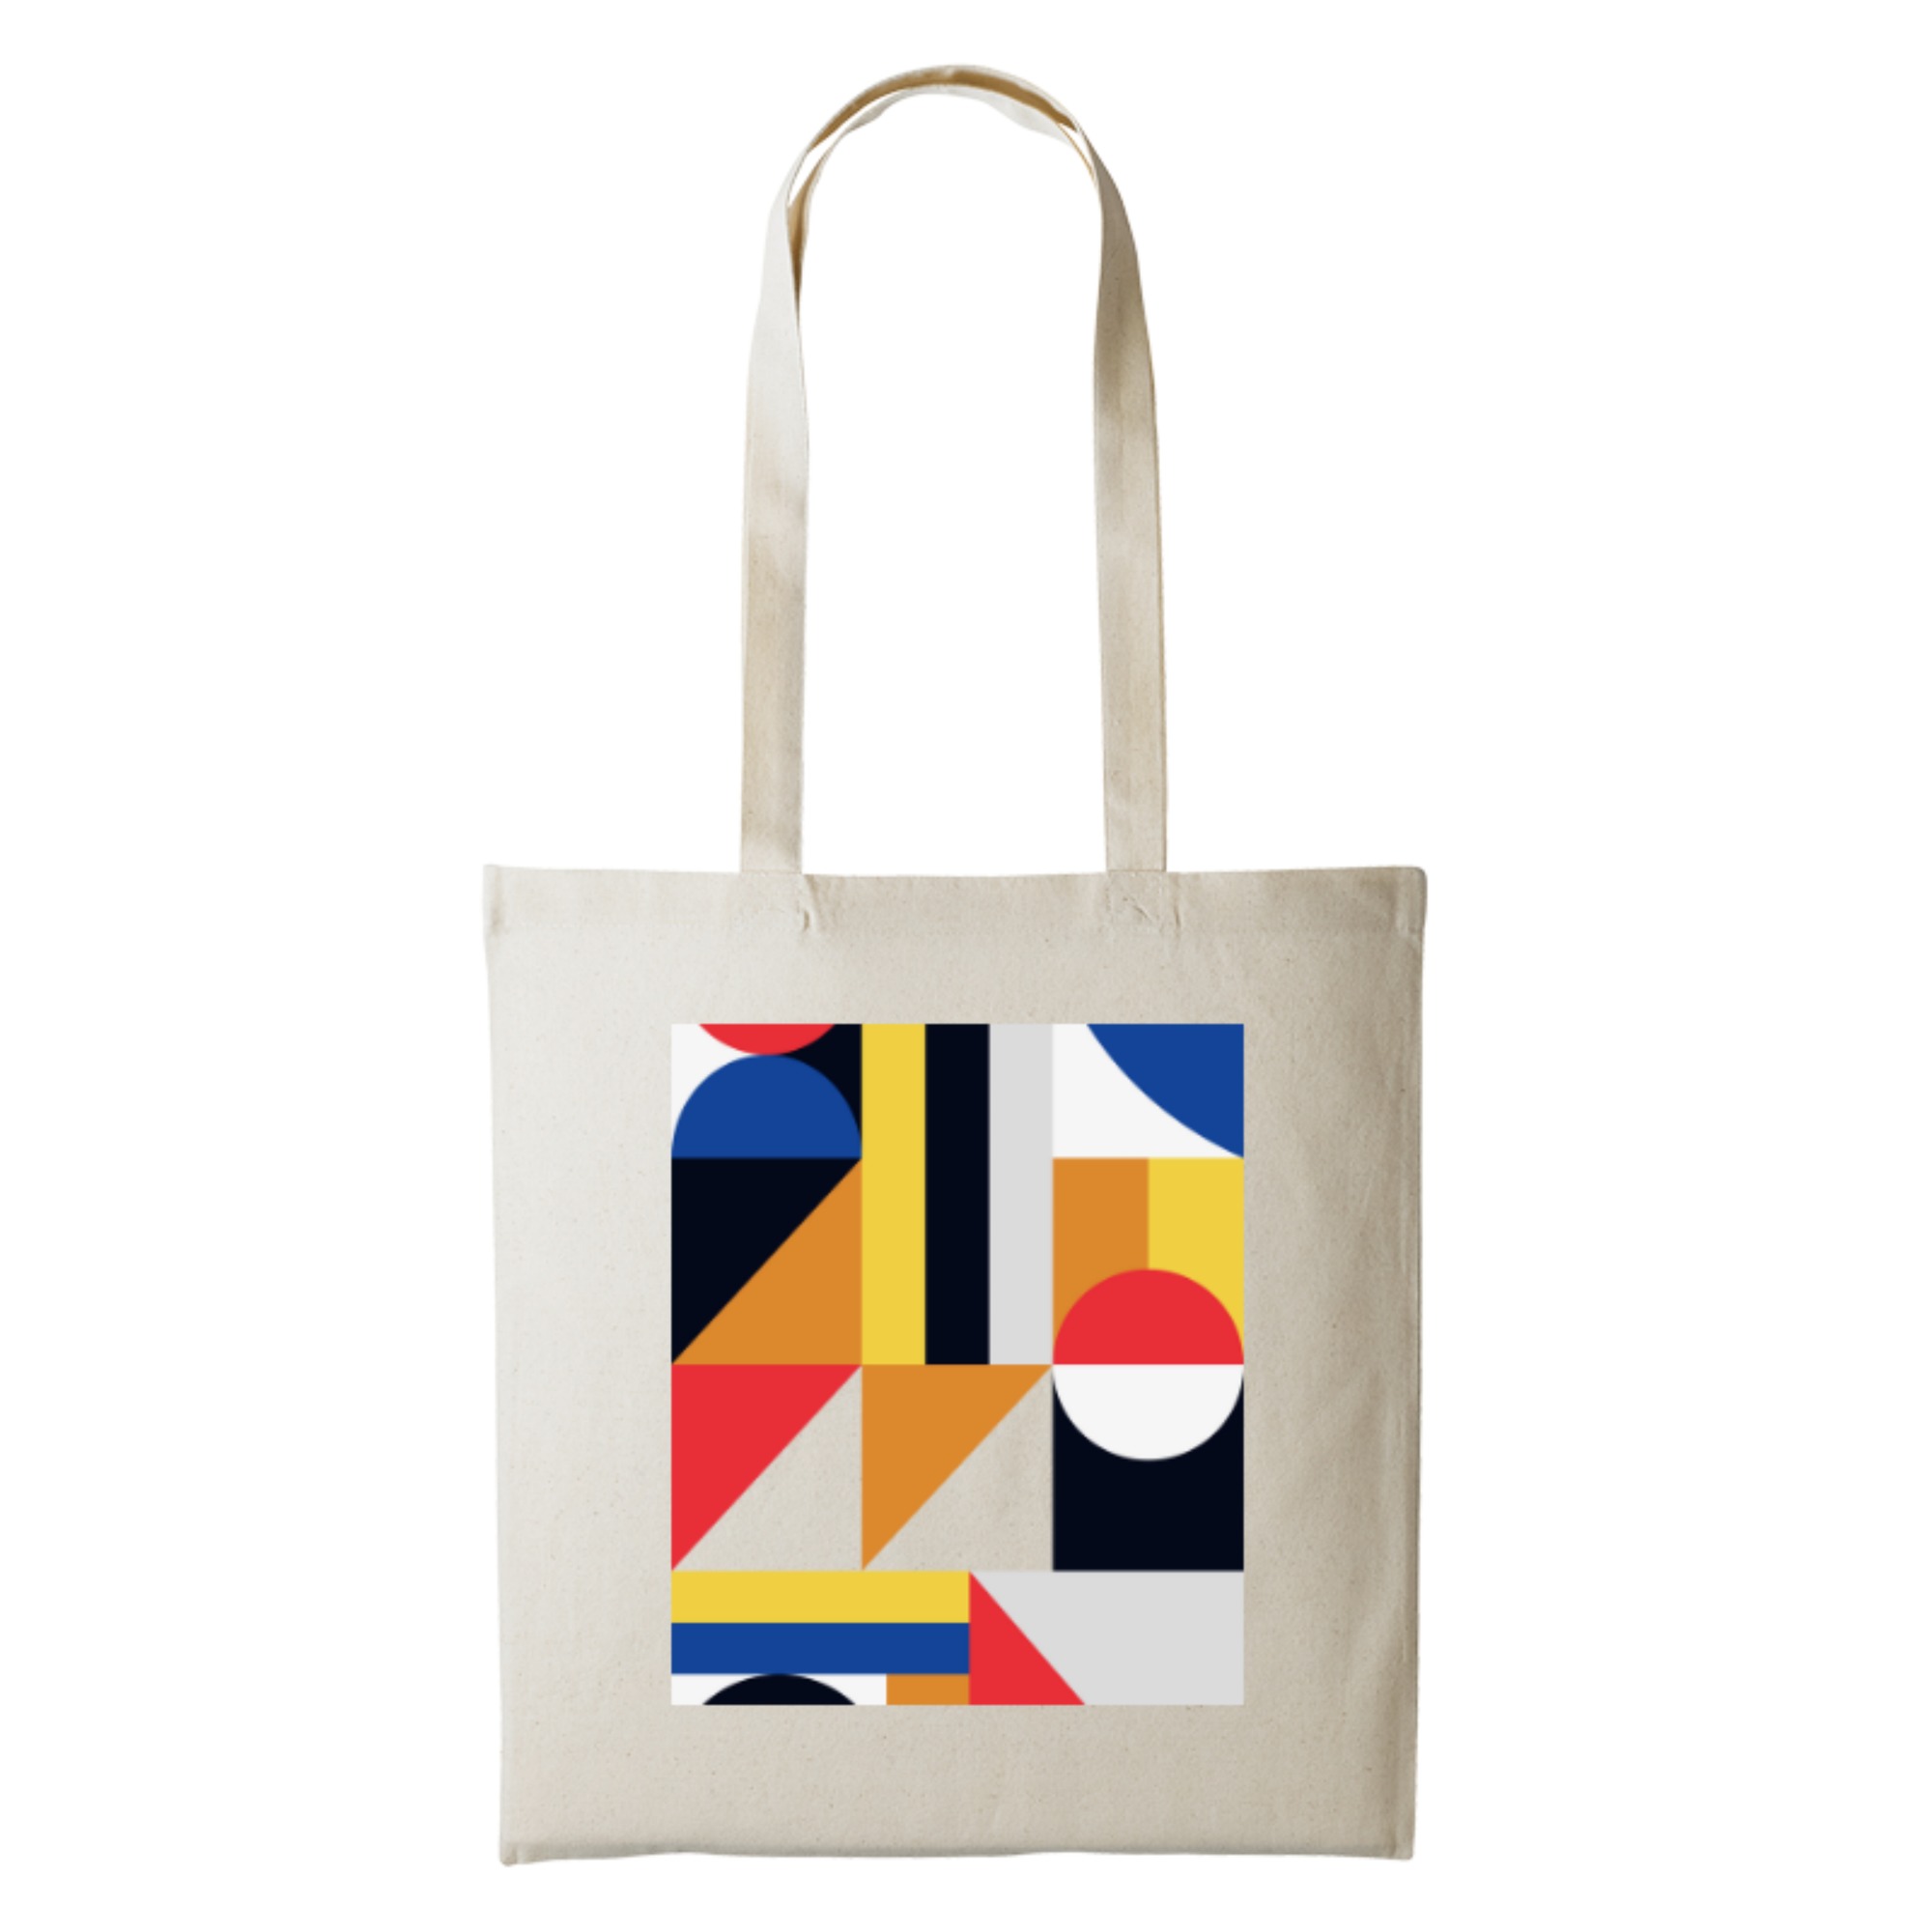 Bauhaus-style Geometric #2 - Natural Long Handle Cotton Shopper/Tote Bag Tote Bag